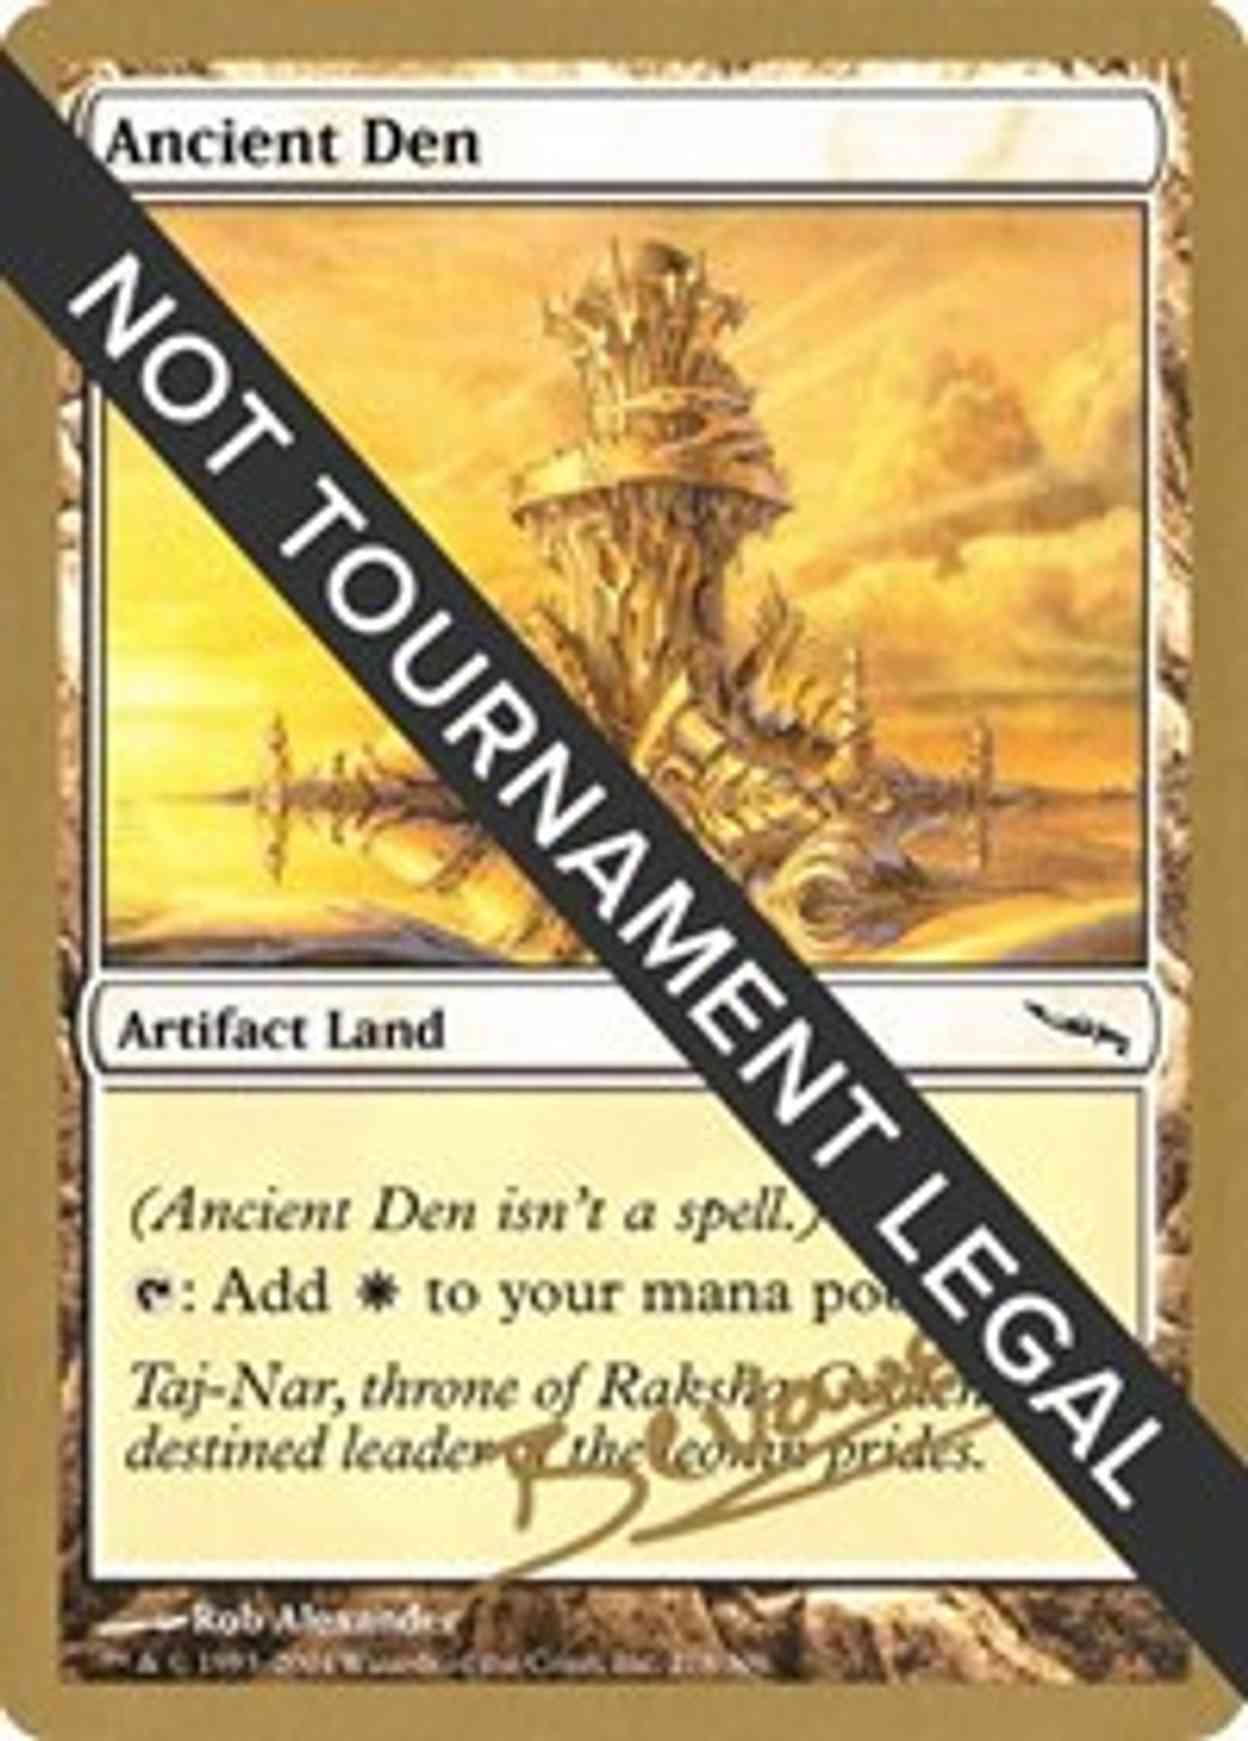 Ancient Den - 2004 Manuel Bevand (MRD) magic card front